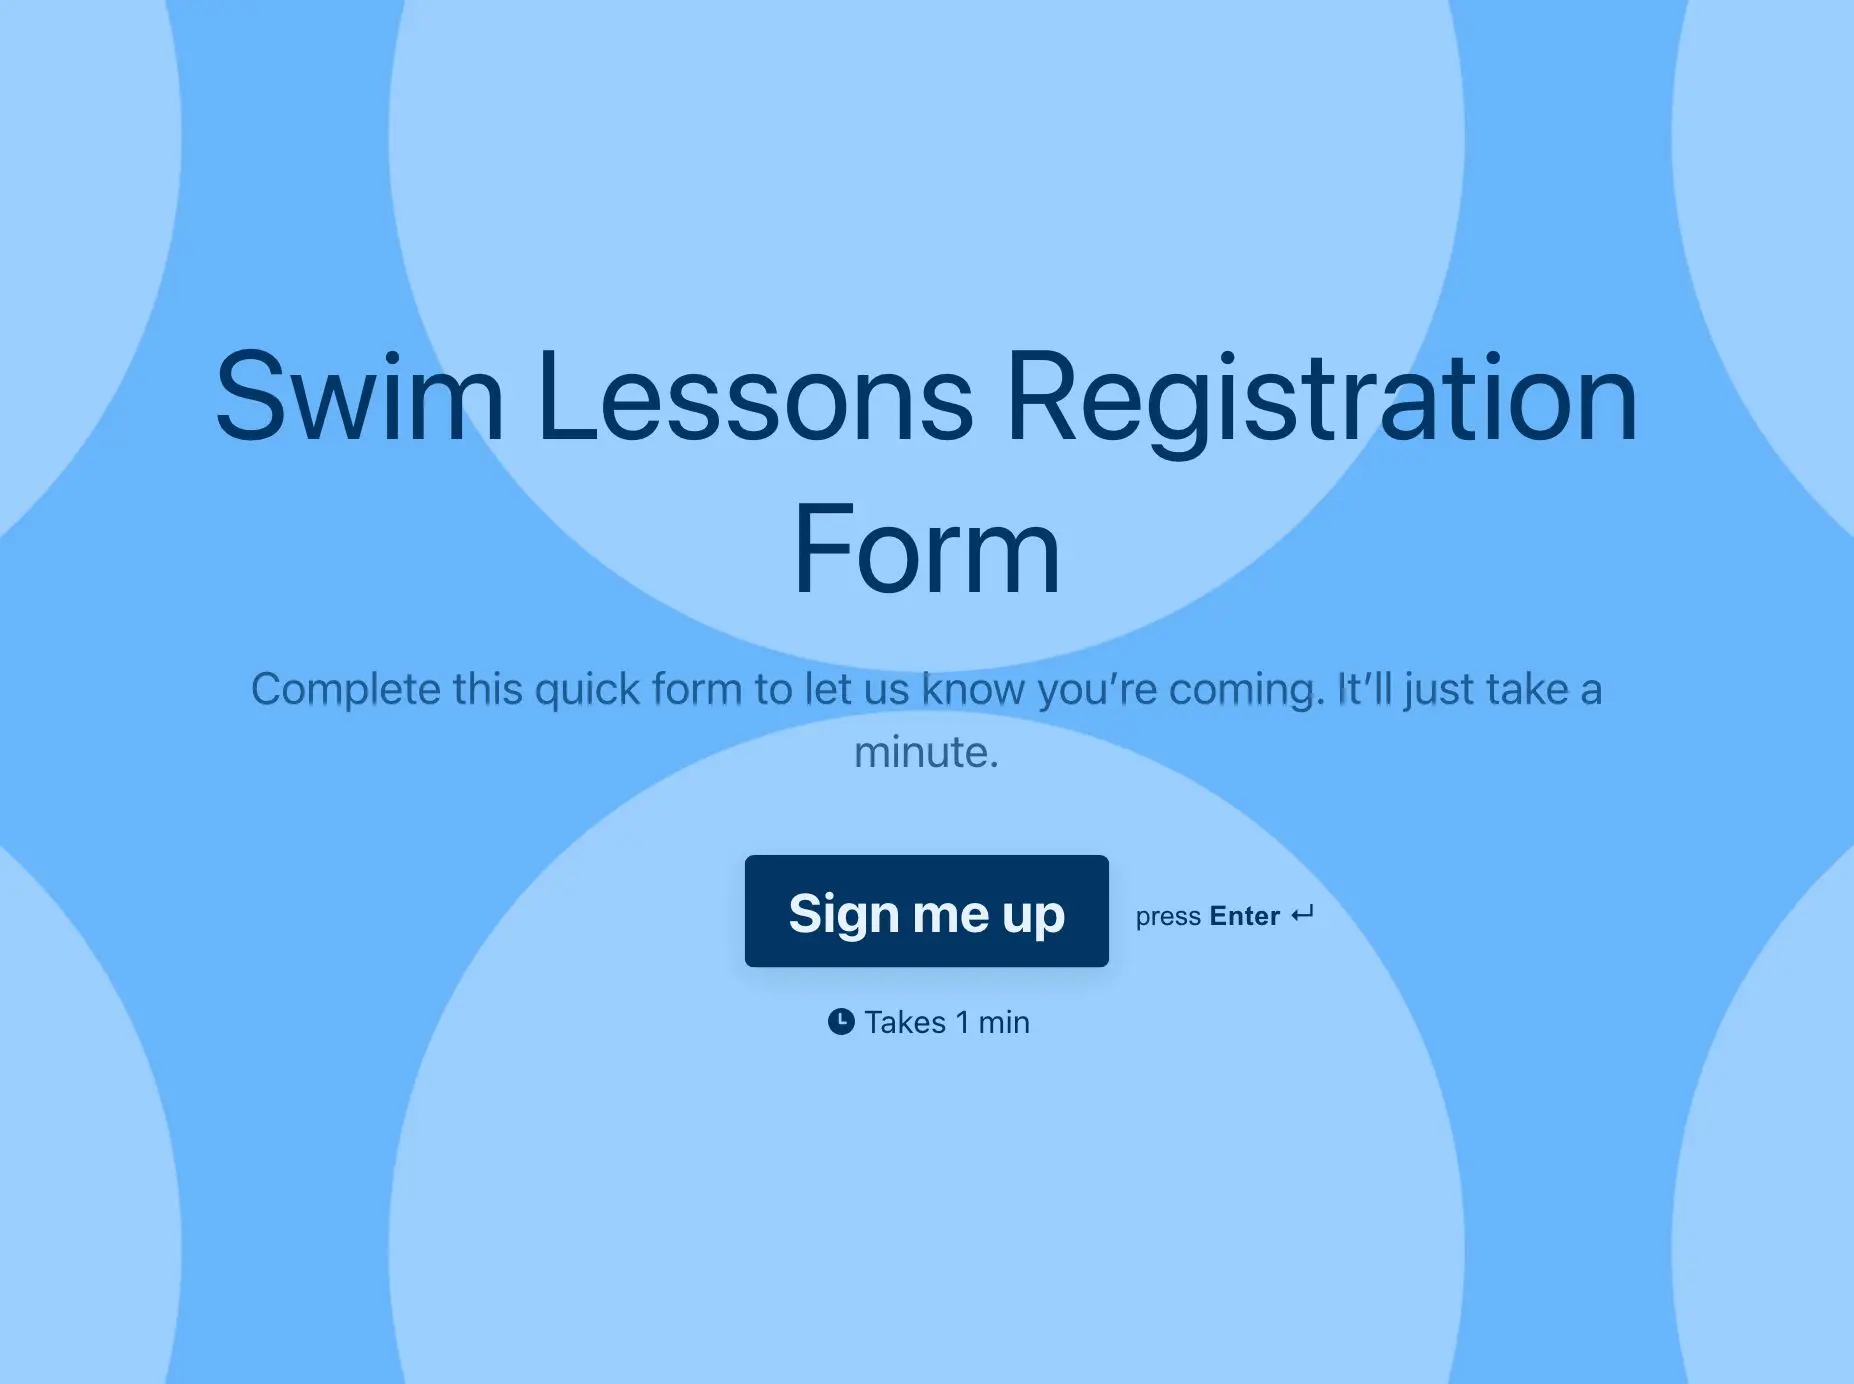 Swim Lessons Registration Form Template Hero